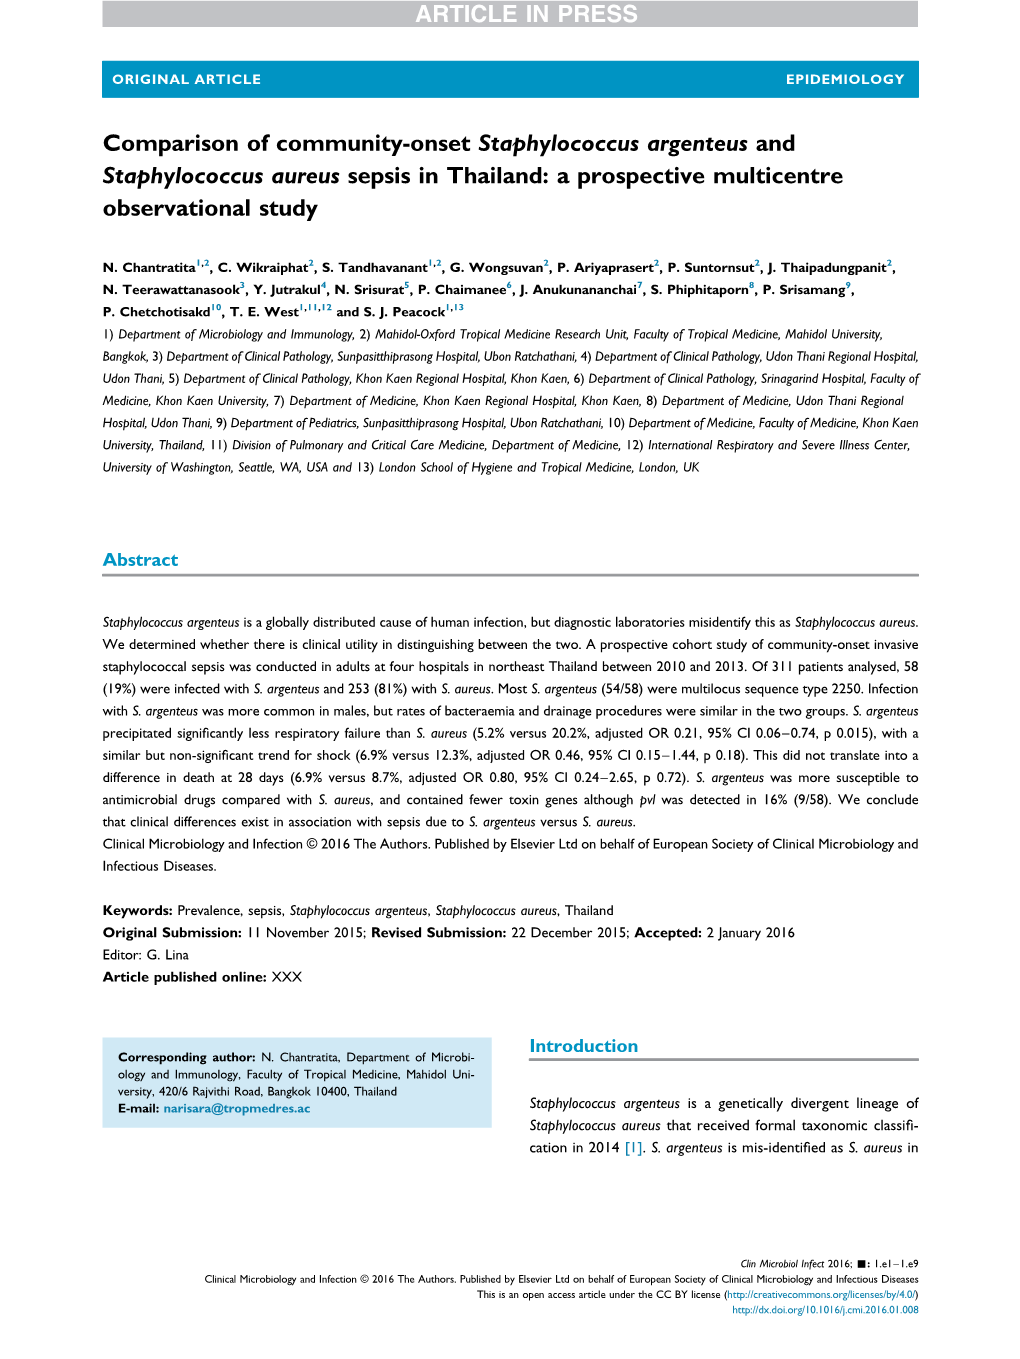 Comparison of Community-Onset Staphylococcus Argenteus and Staphylococcus Aureus Sepsis in Thailand: a Prospective Multicentre Observational Study